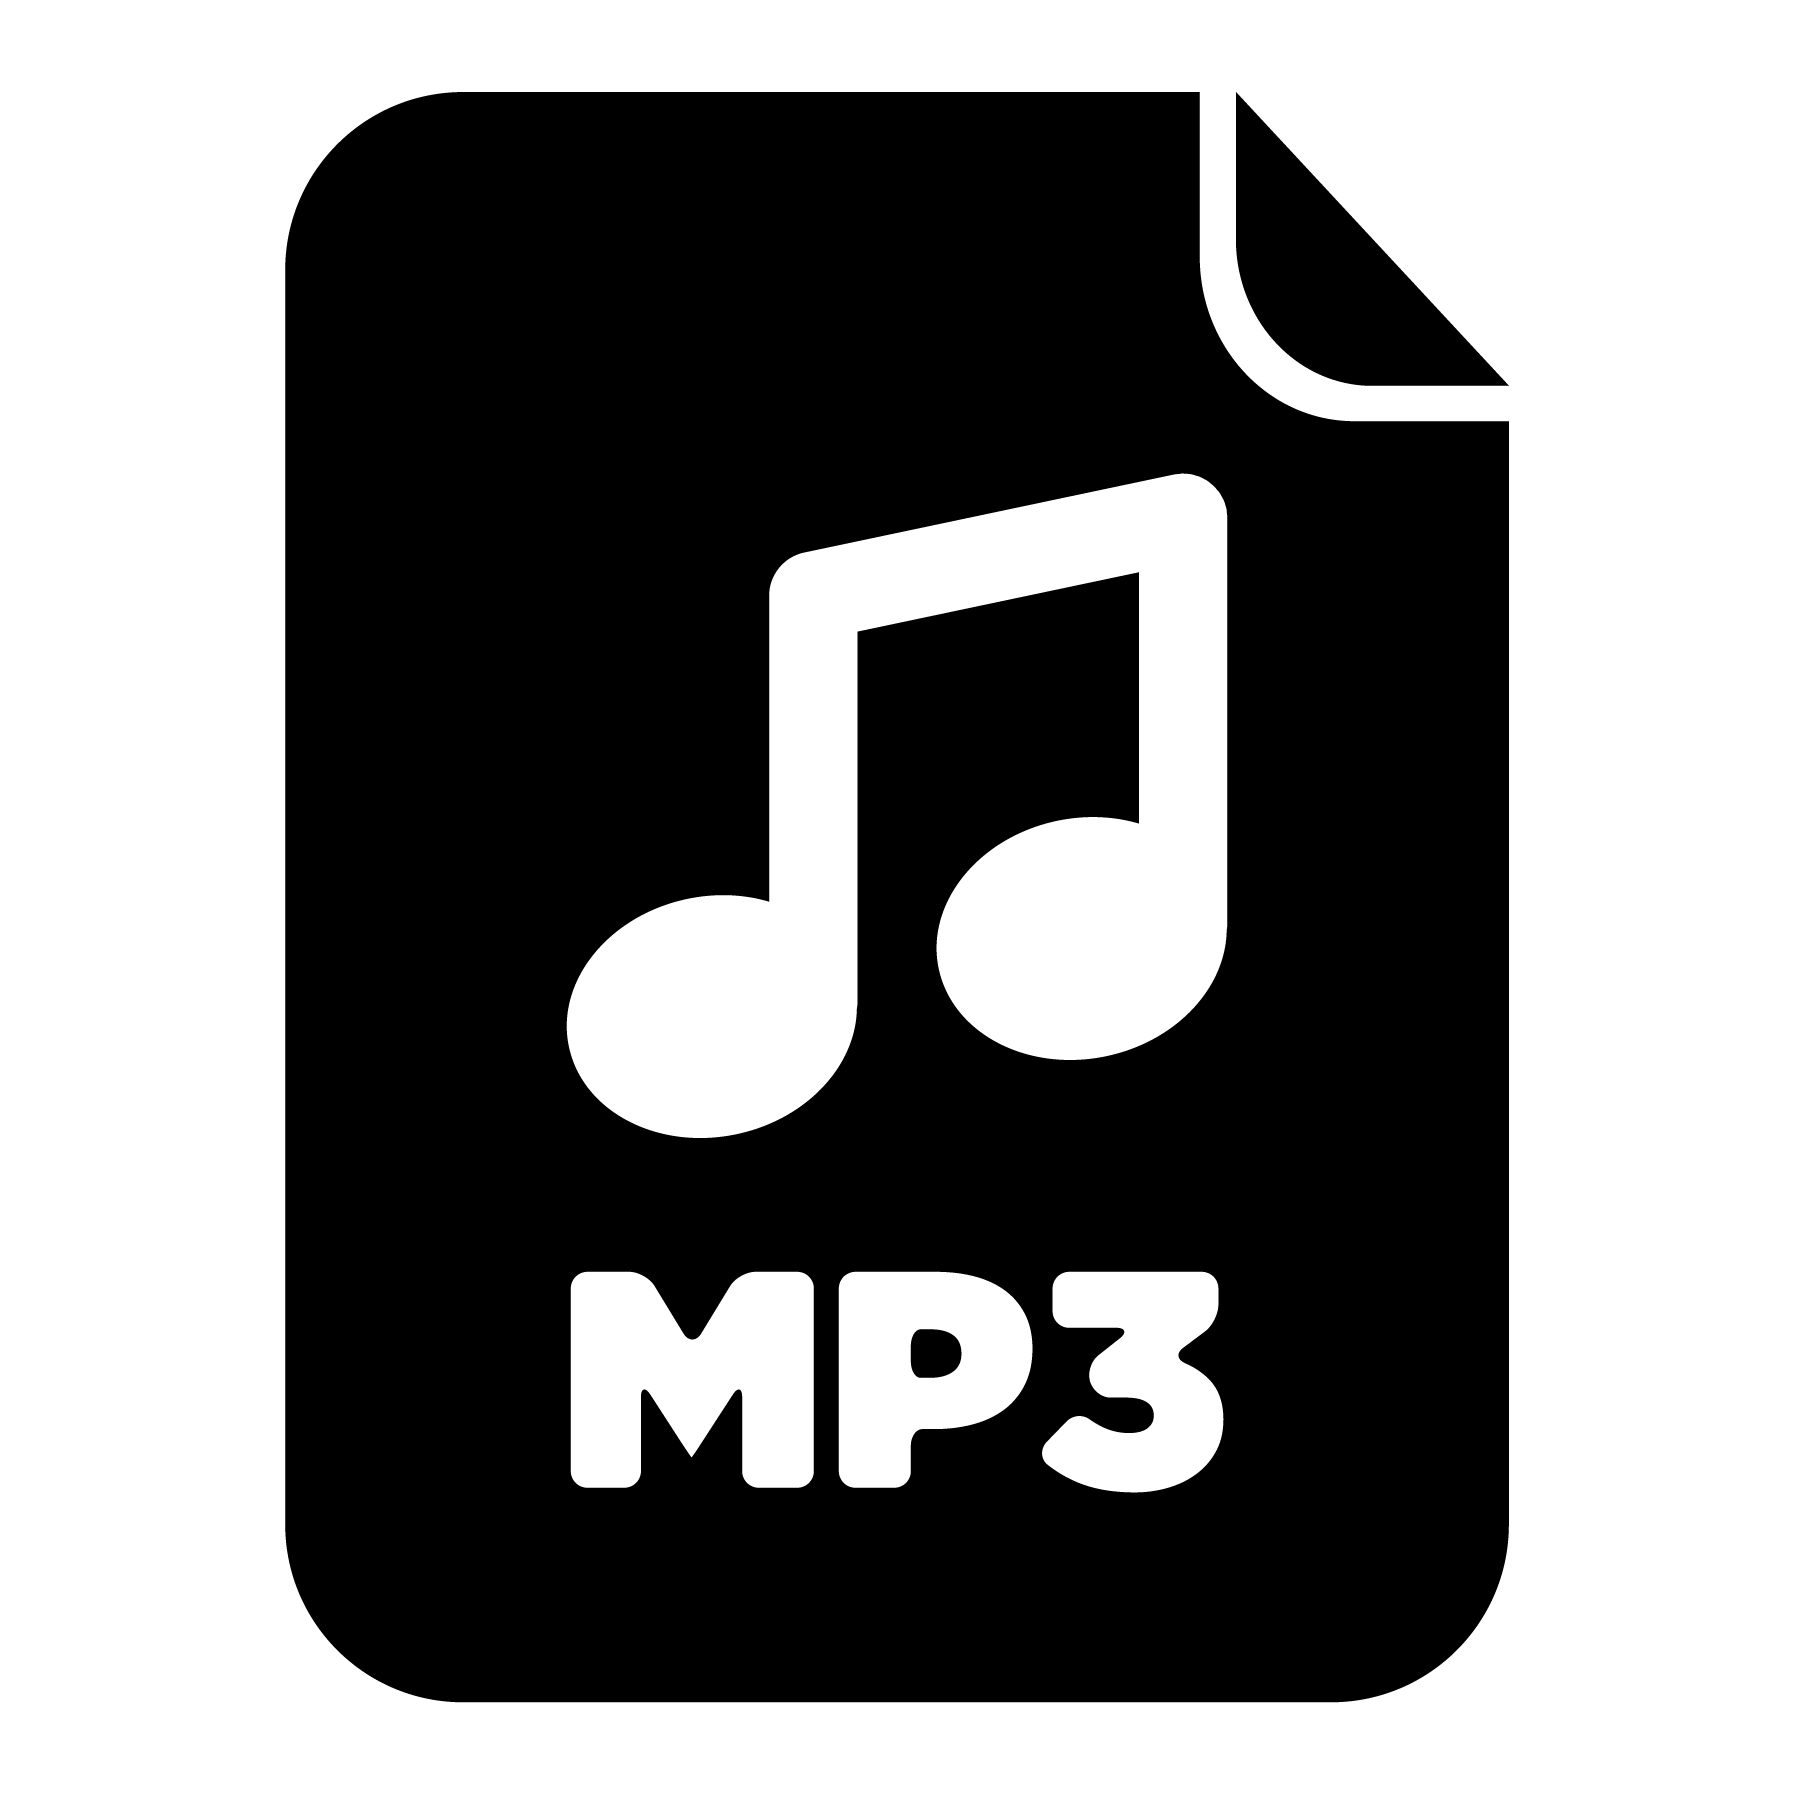 Mp3 звучание